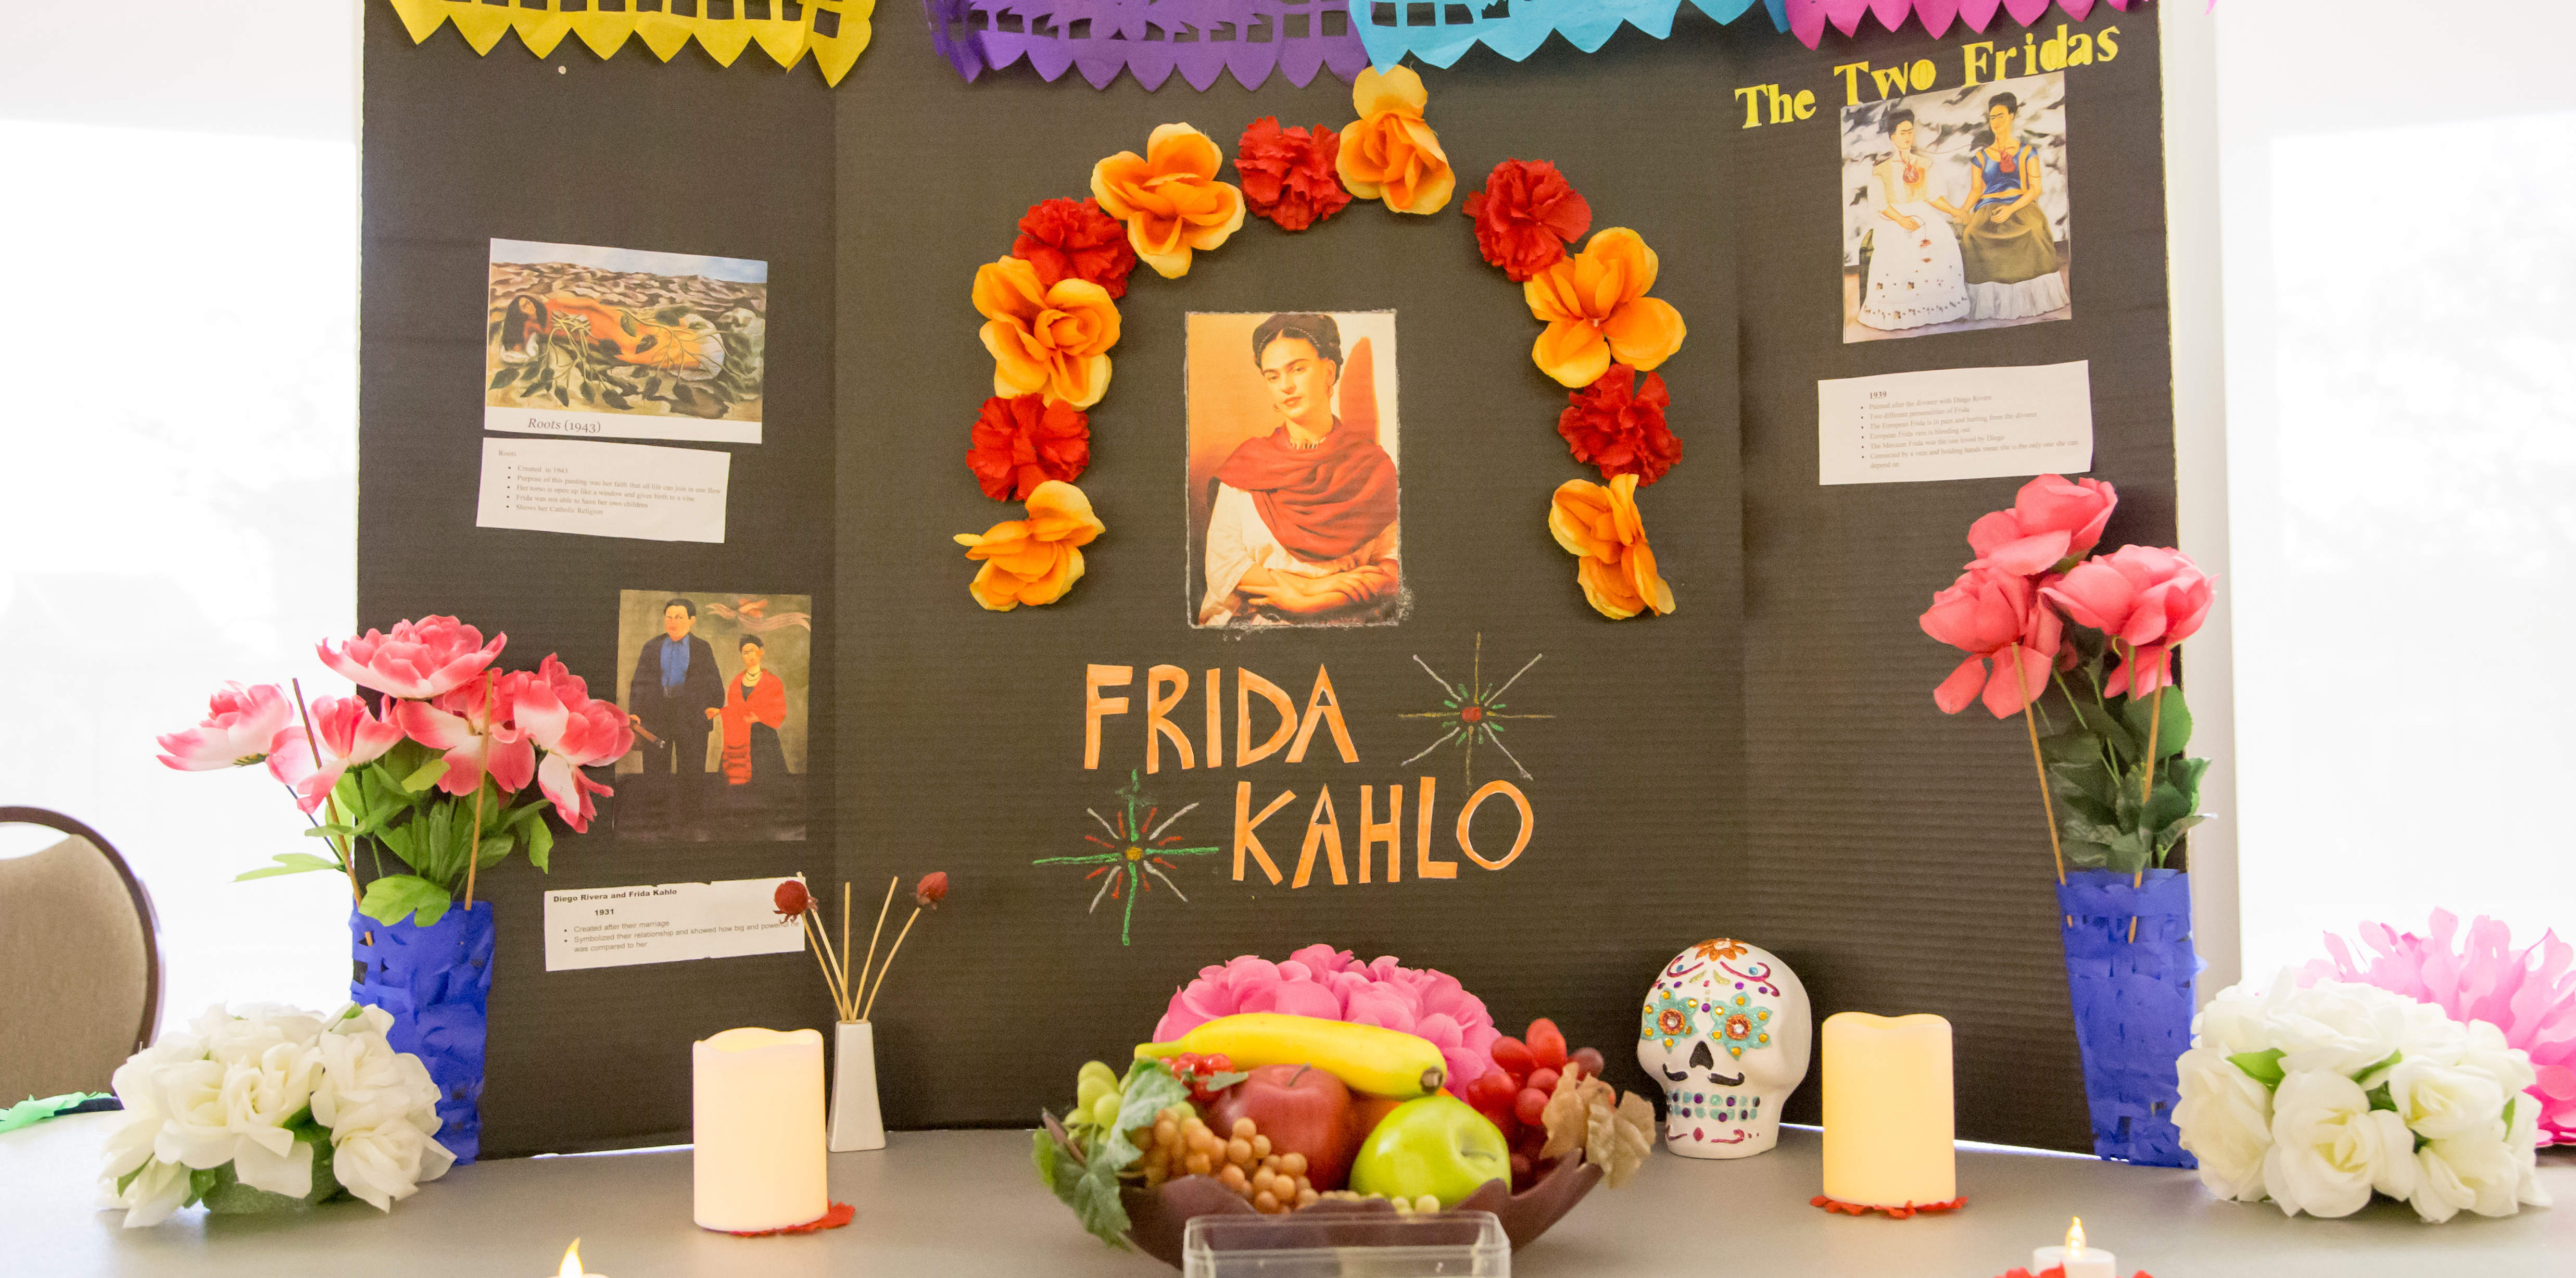 Colorful altar depitcing photos of Frida Kahlo